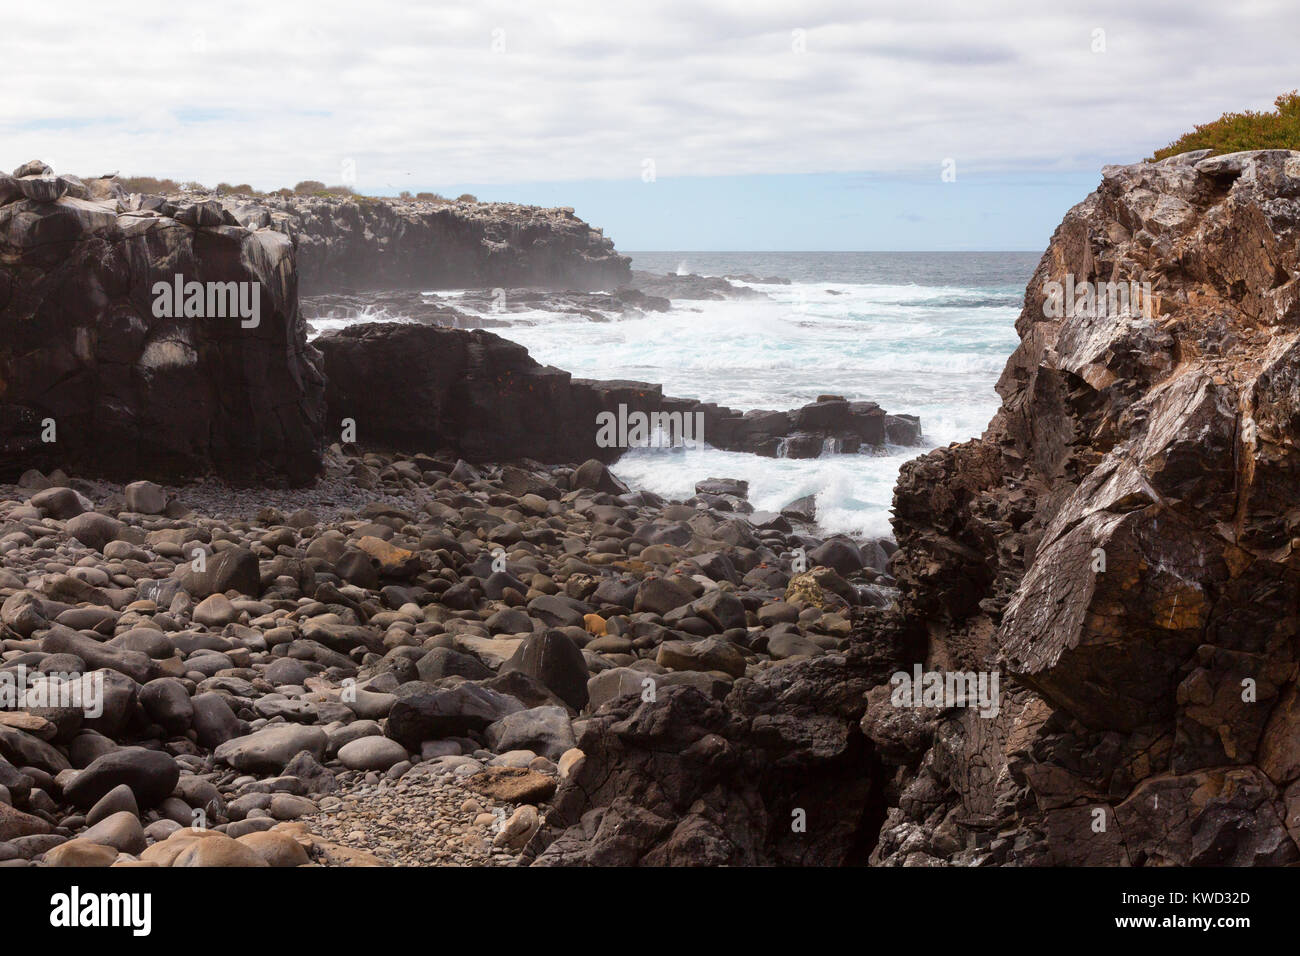 Galapagos Insel Espanola - Der einsame felsige Küstenlinie von Espanola Island (Haube Insel), Galapagos, Ecuador Südamerika Stockfoto